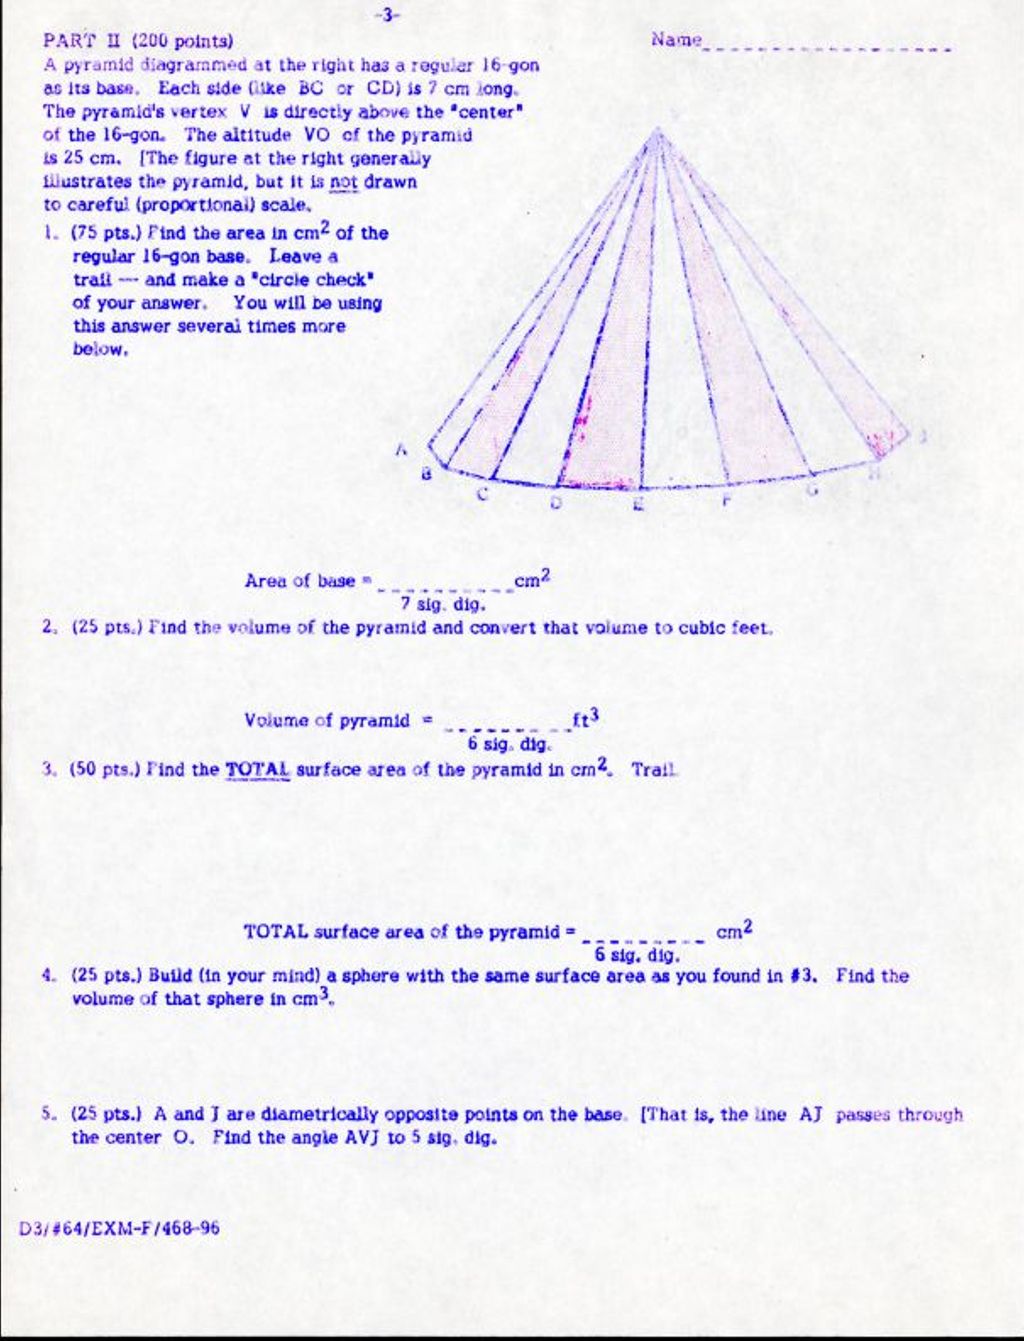 Miniature of A Pyramid Diagrammed (Part II) F96